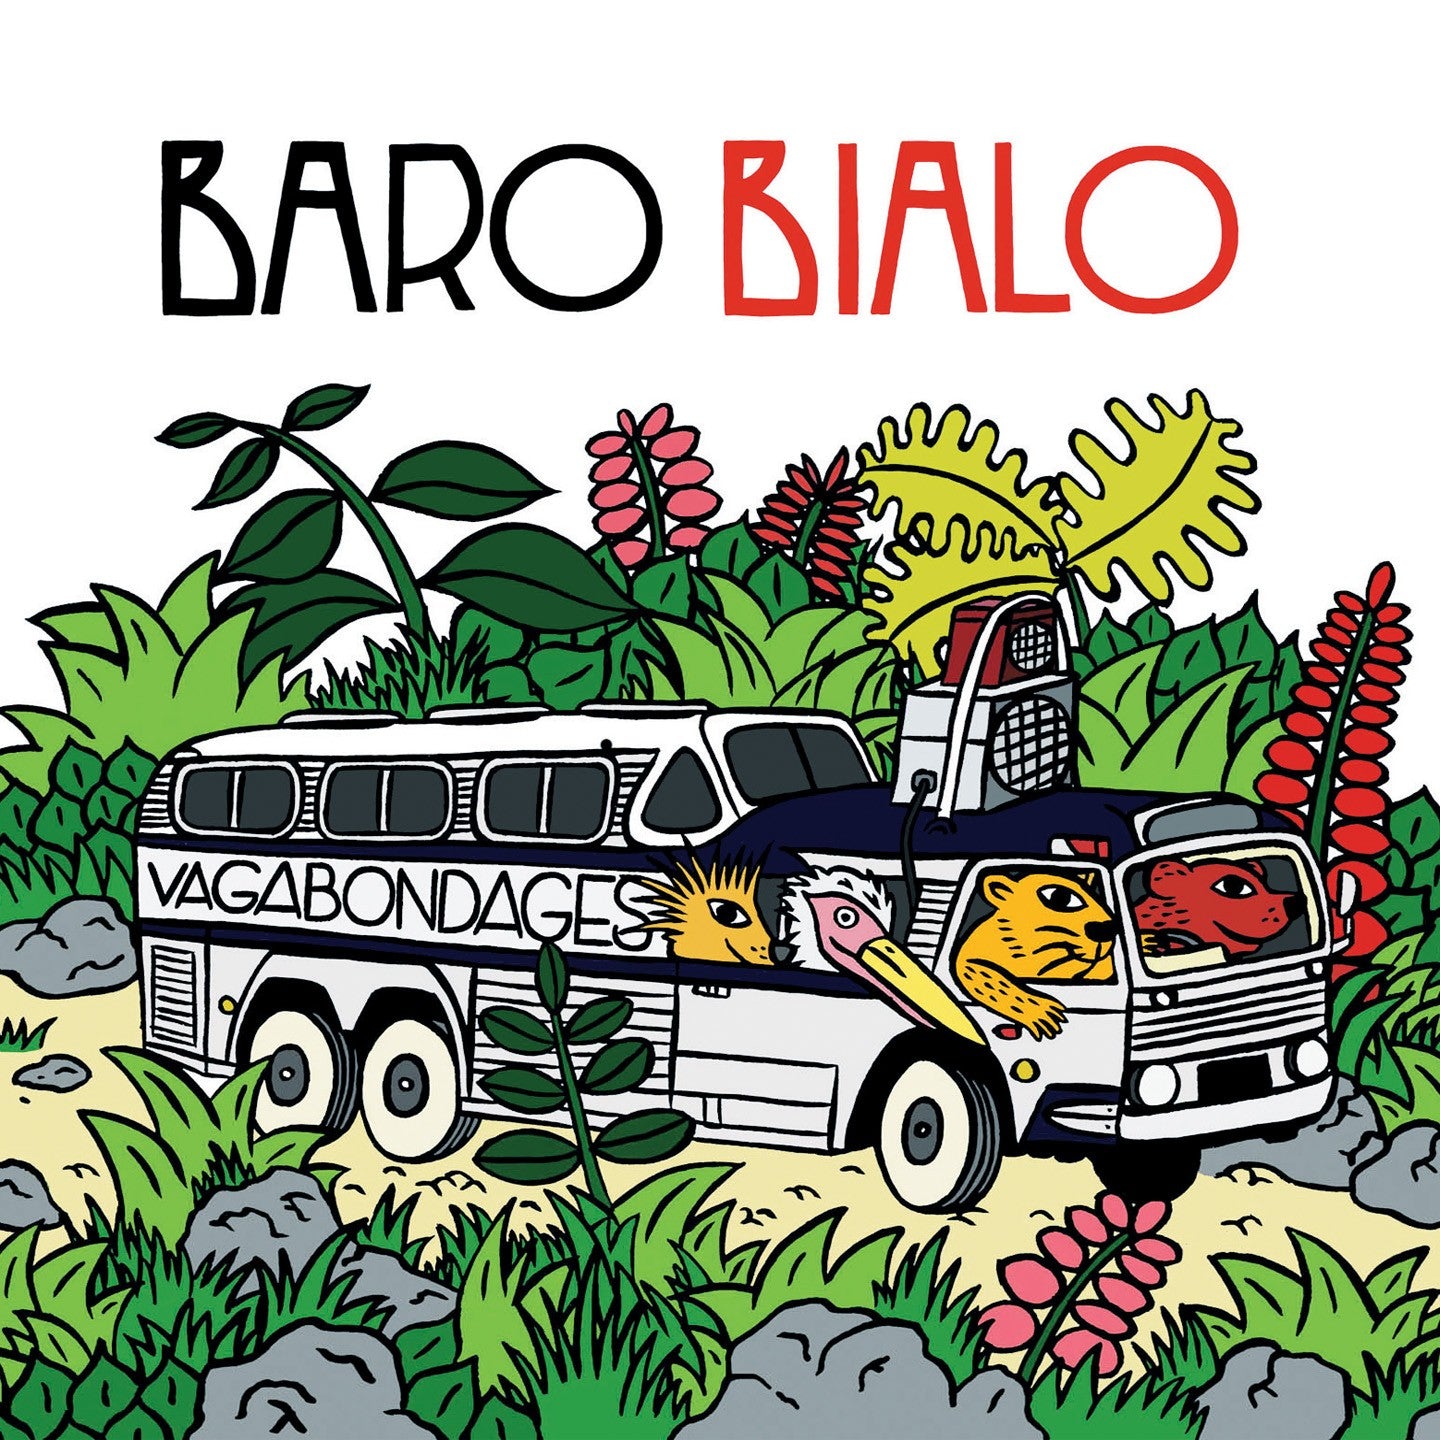 Pochette de : VAGABONDAGES - BARO BIALO (CD)